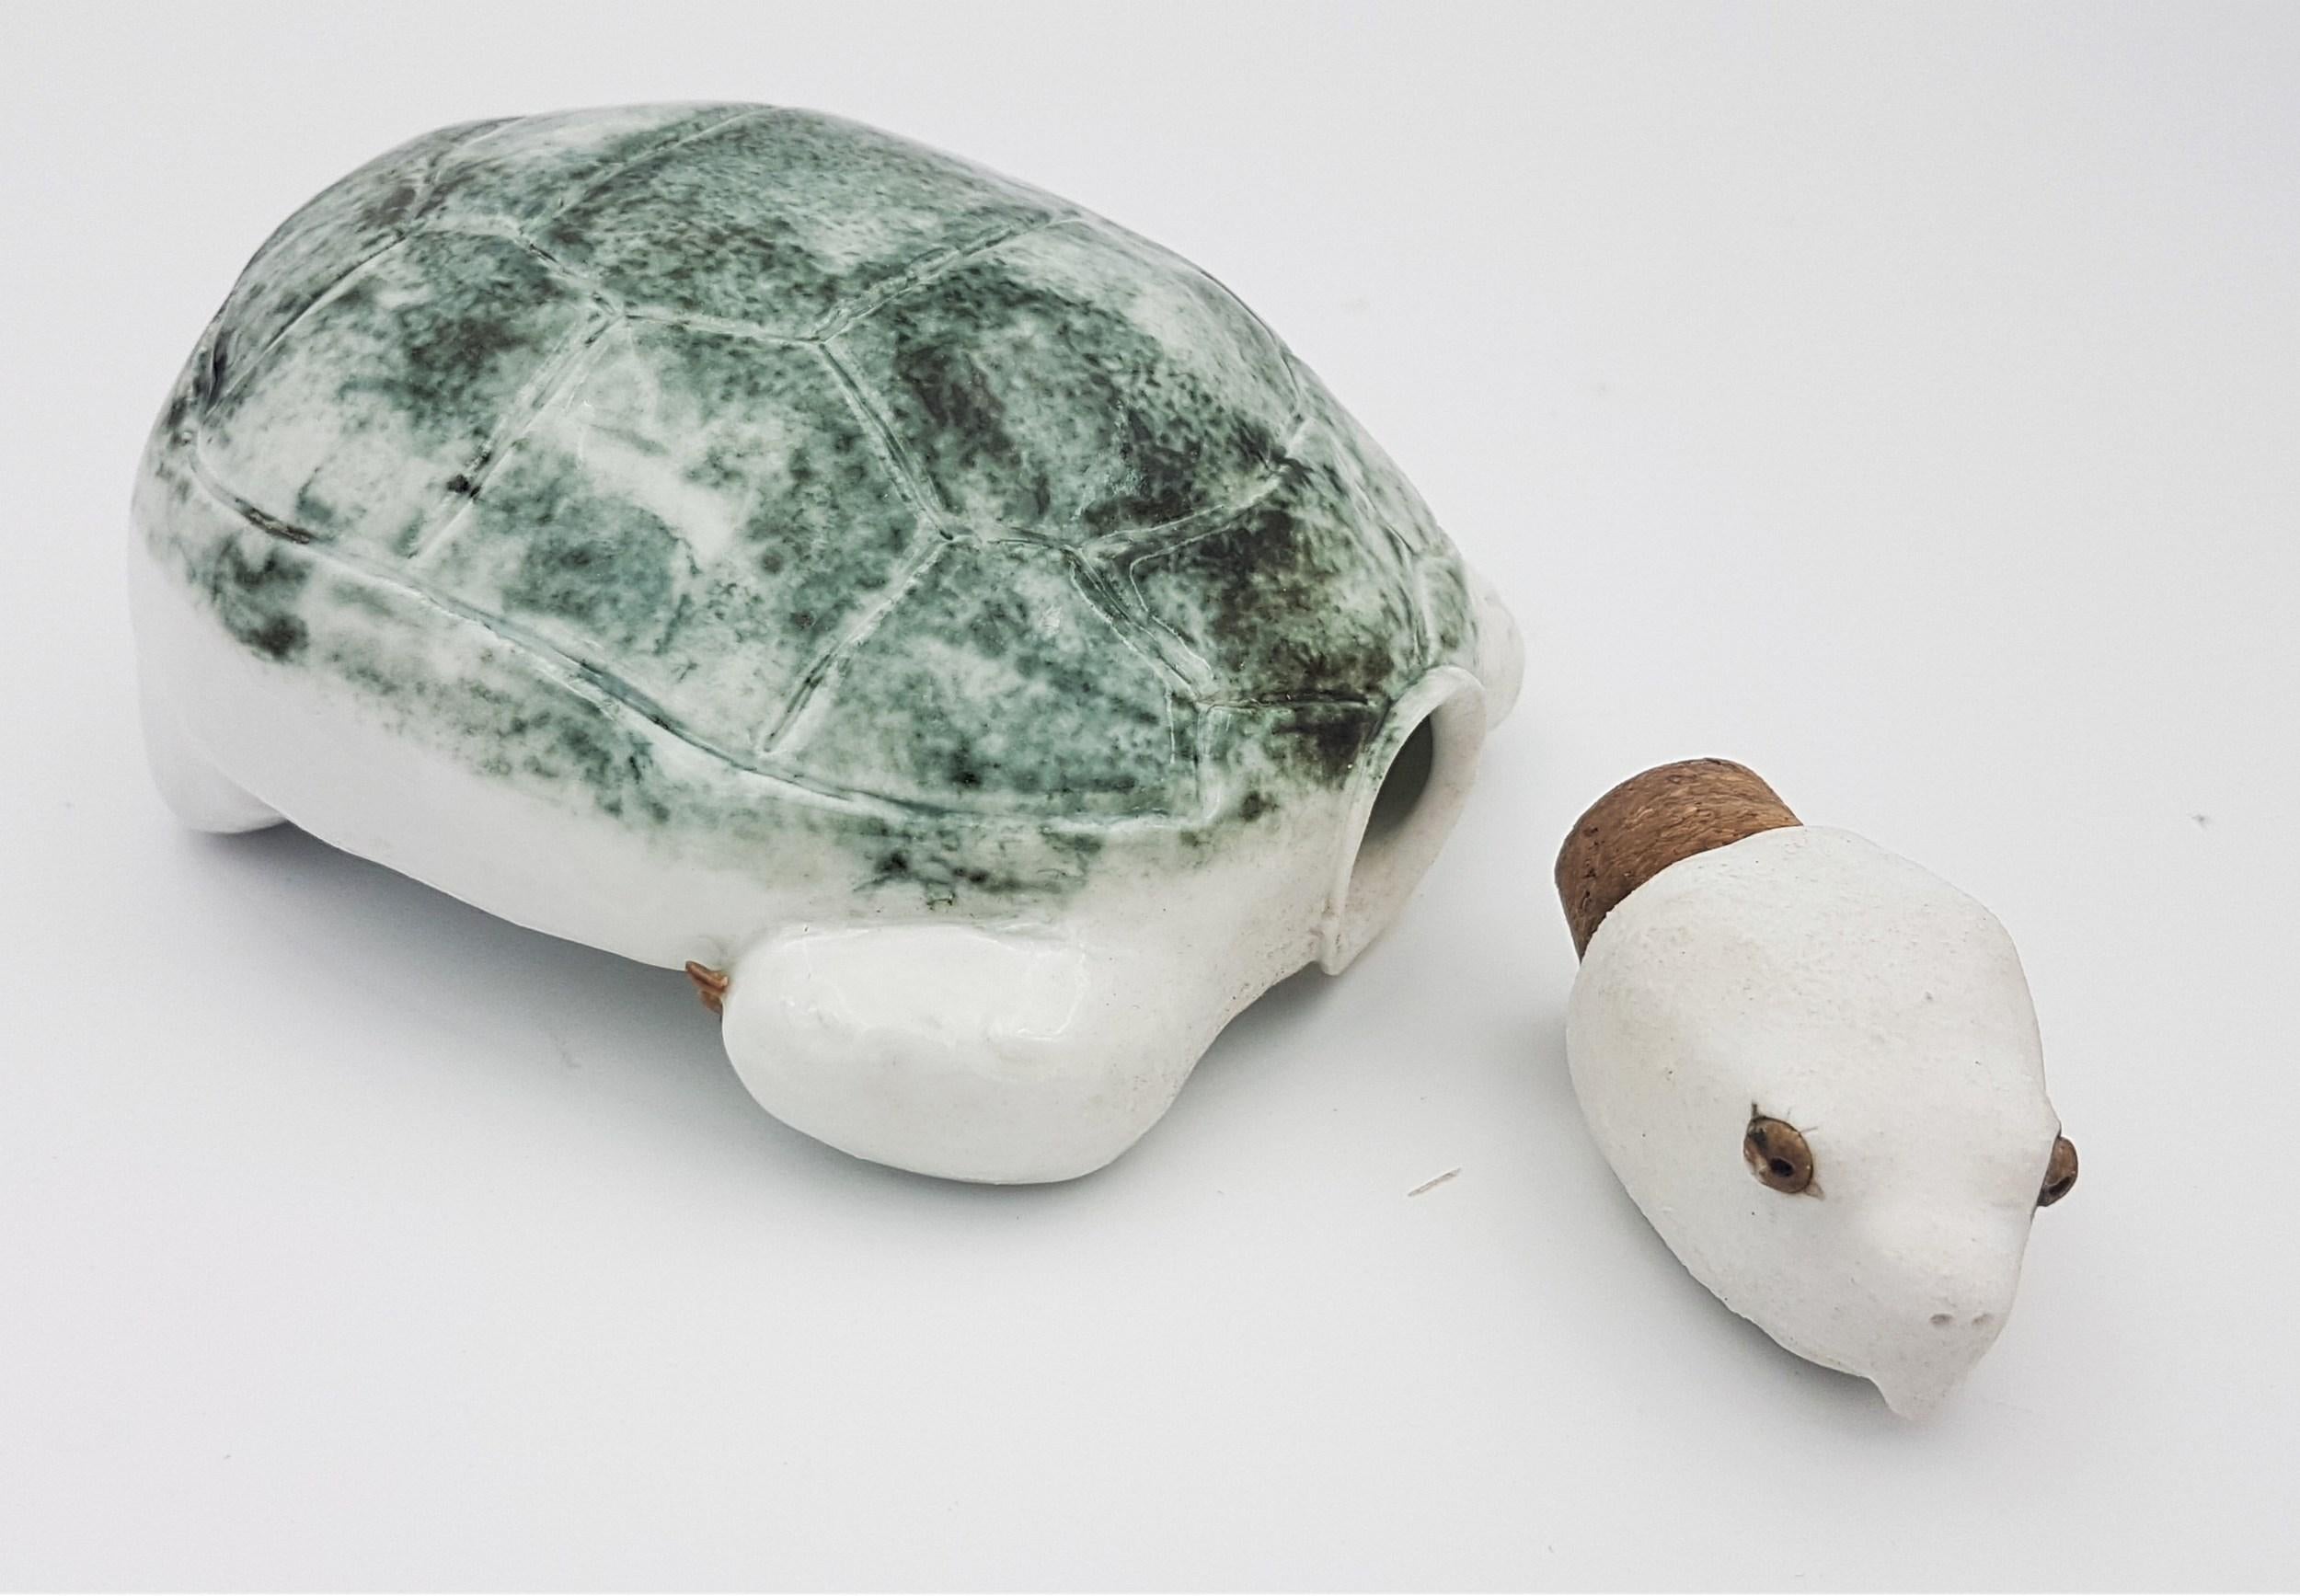 Green Turtle Flask (Porcelain, Hand-made, Unique, Original, Gift Idea) - Pop Art Sculpture by Brandon Schnur